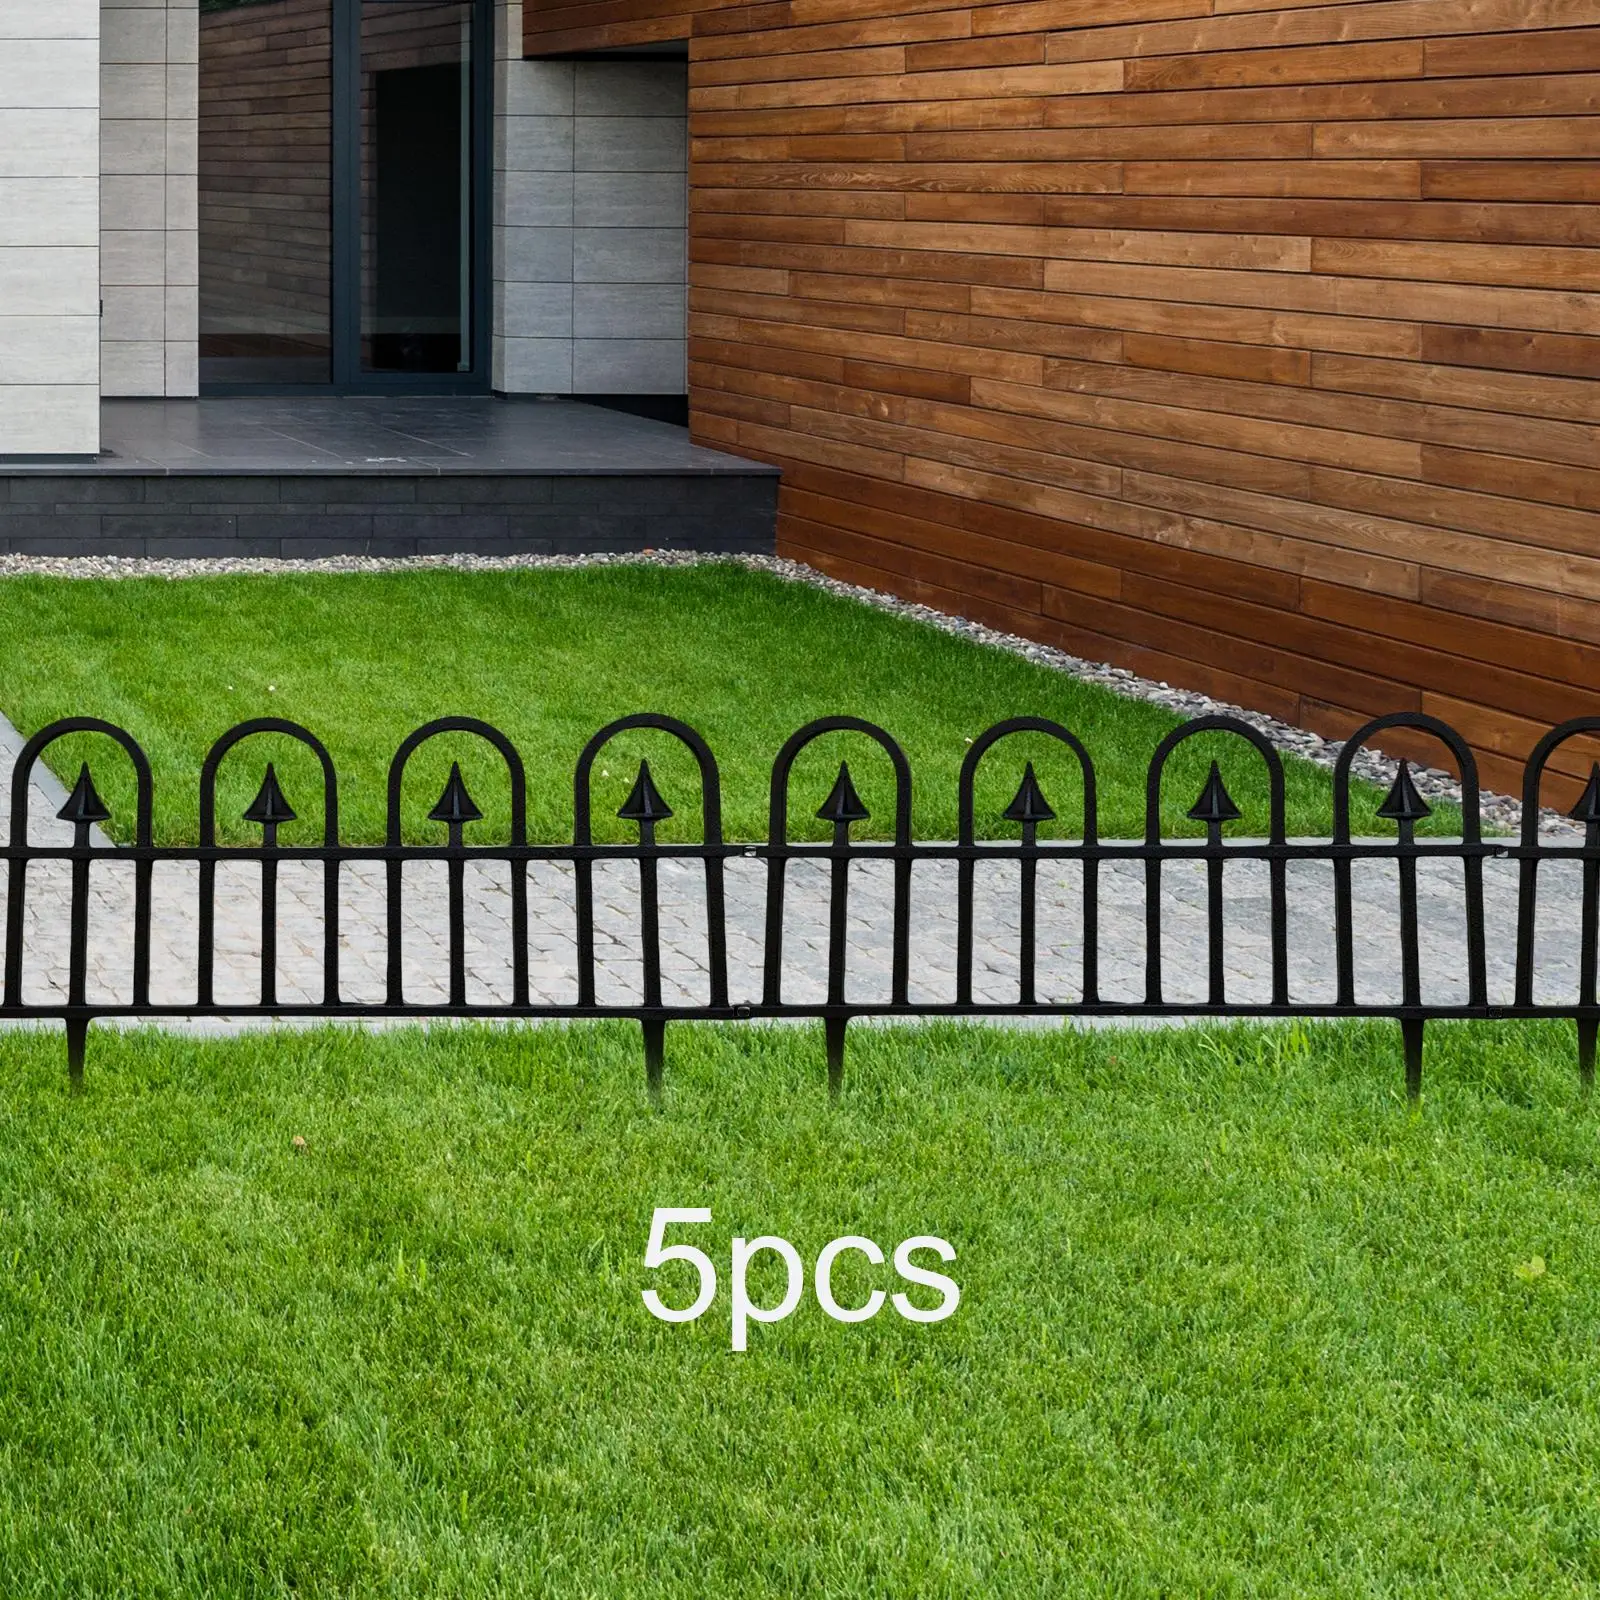 5Pcs Garden Edging Border Edging Water Resistant Flexible Fence Liner for Outdoor Garden Flower Lawn Edge Patio Path Flower Bed